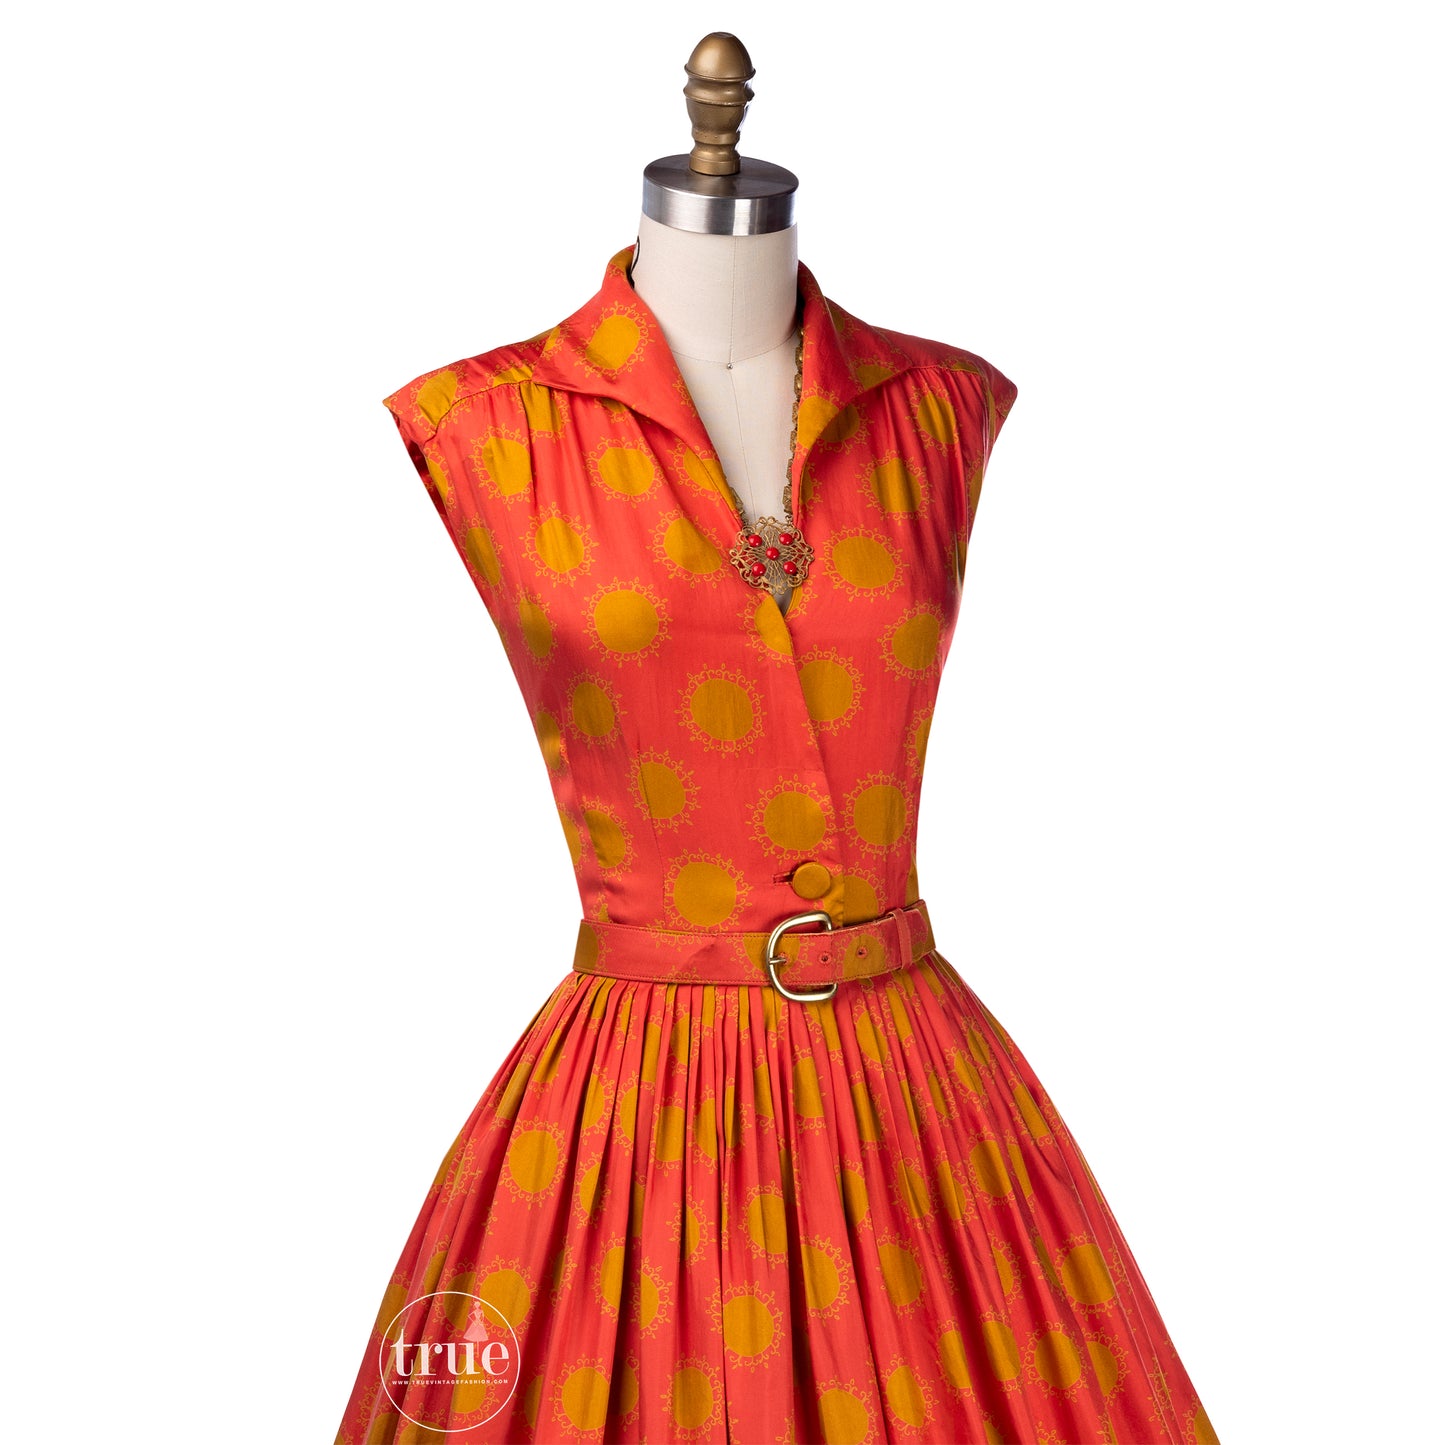 vintage 1950's dress ...lovely Georgia Bullock for I.MAGNIN & CO. silk alexander girard-esque stylized sun novelty print dress